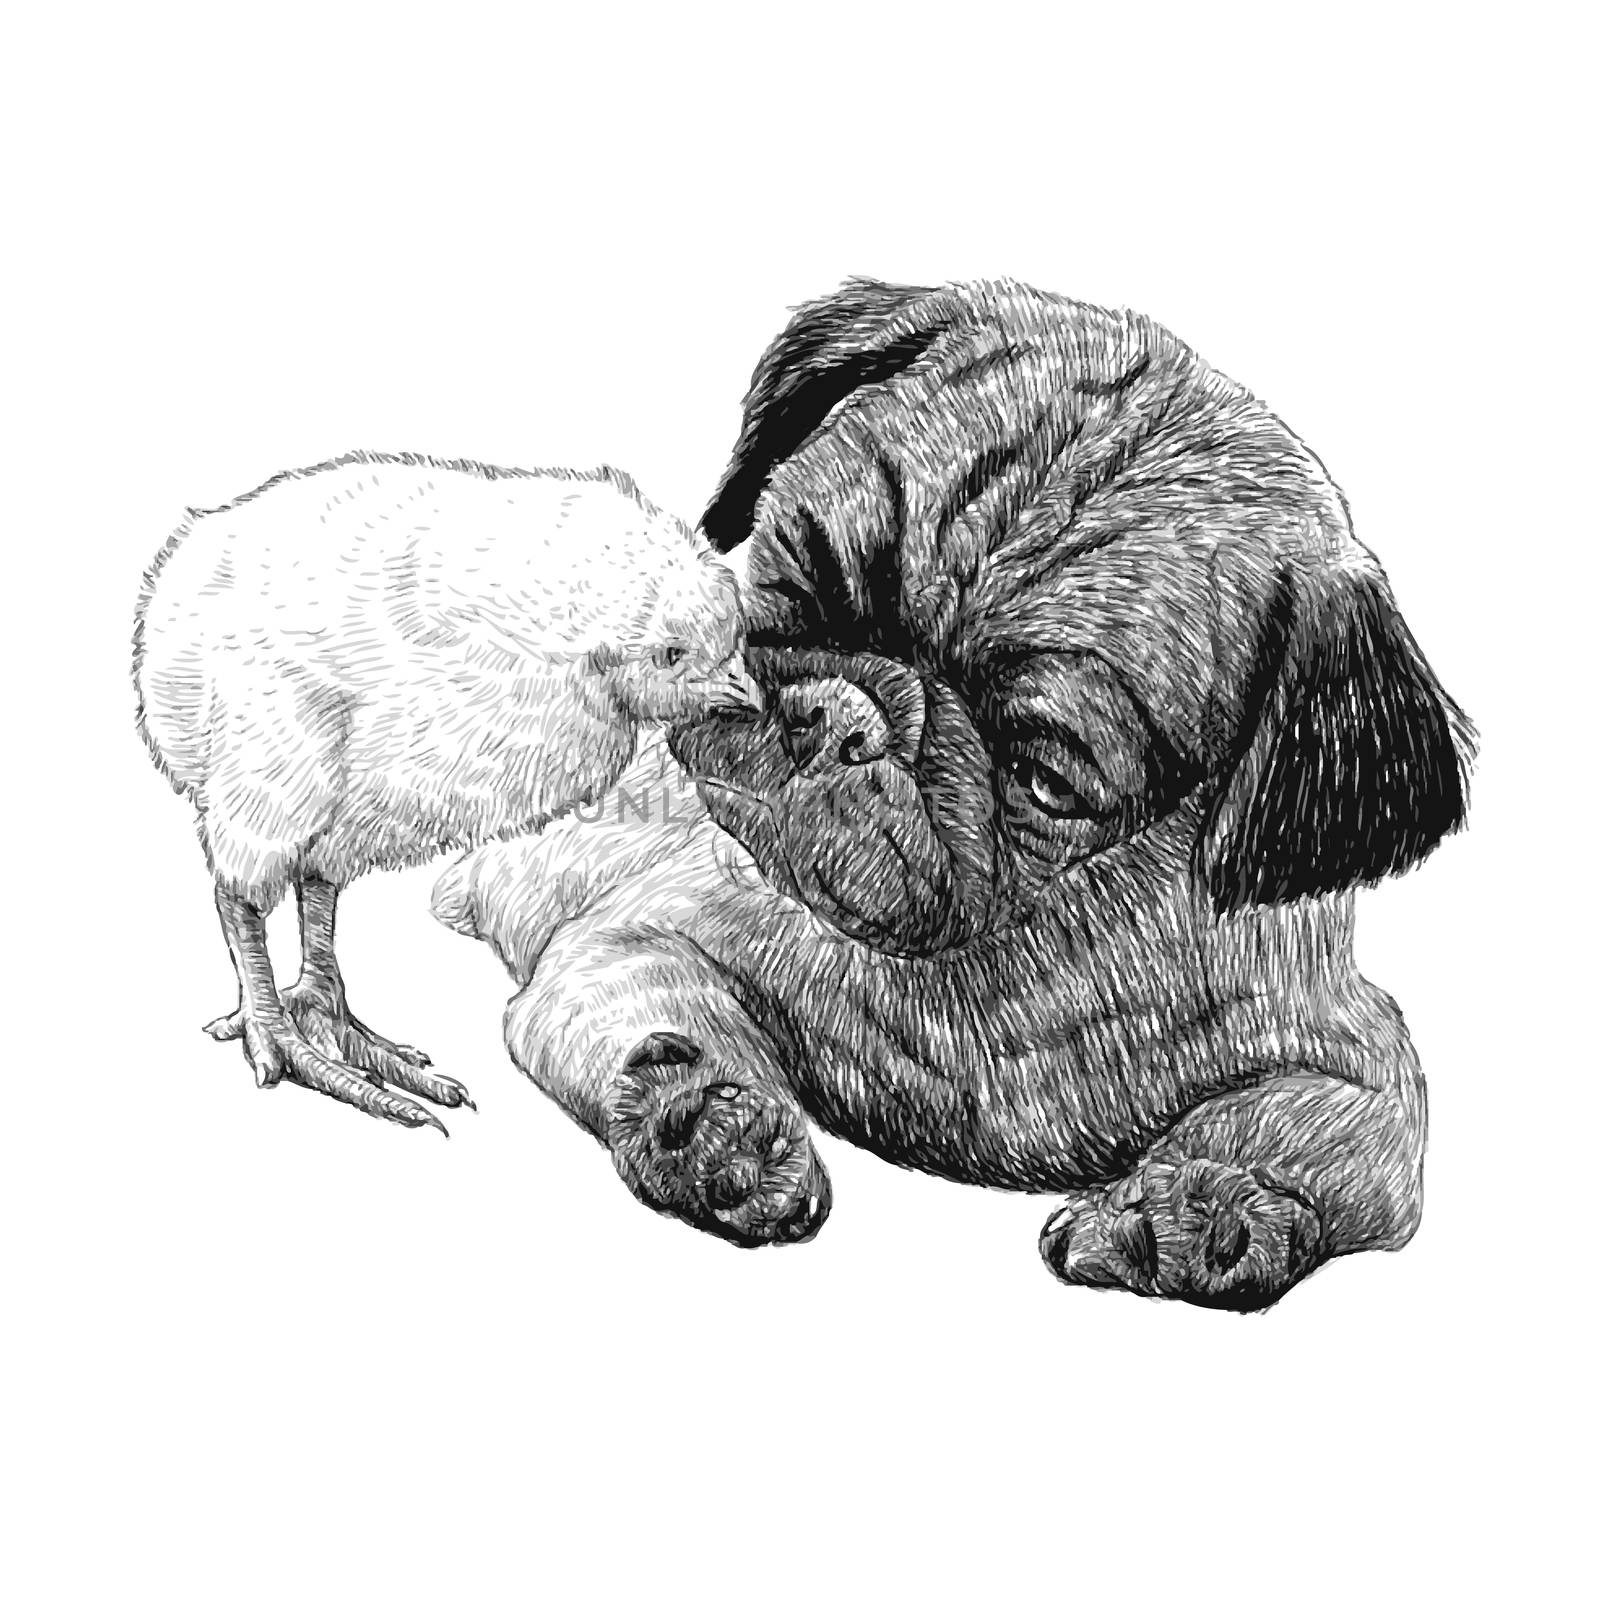 Image of Pug dog ang a chick hand drawn vector